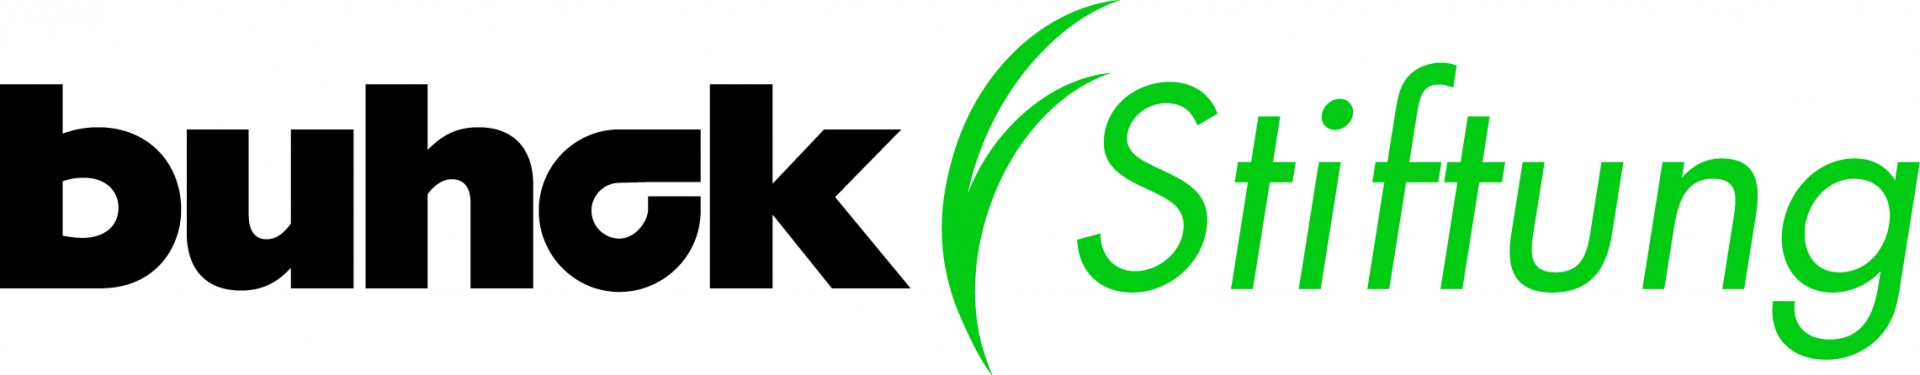 Buhck-Stiftung Logo